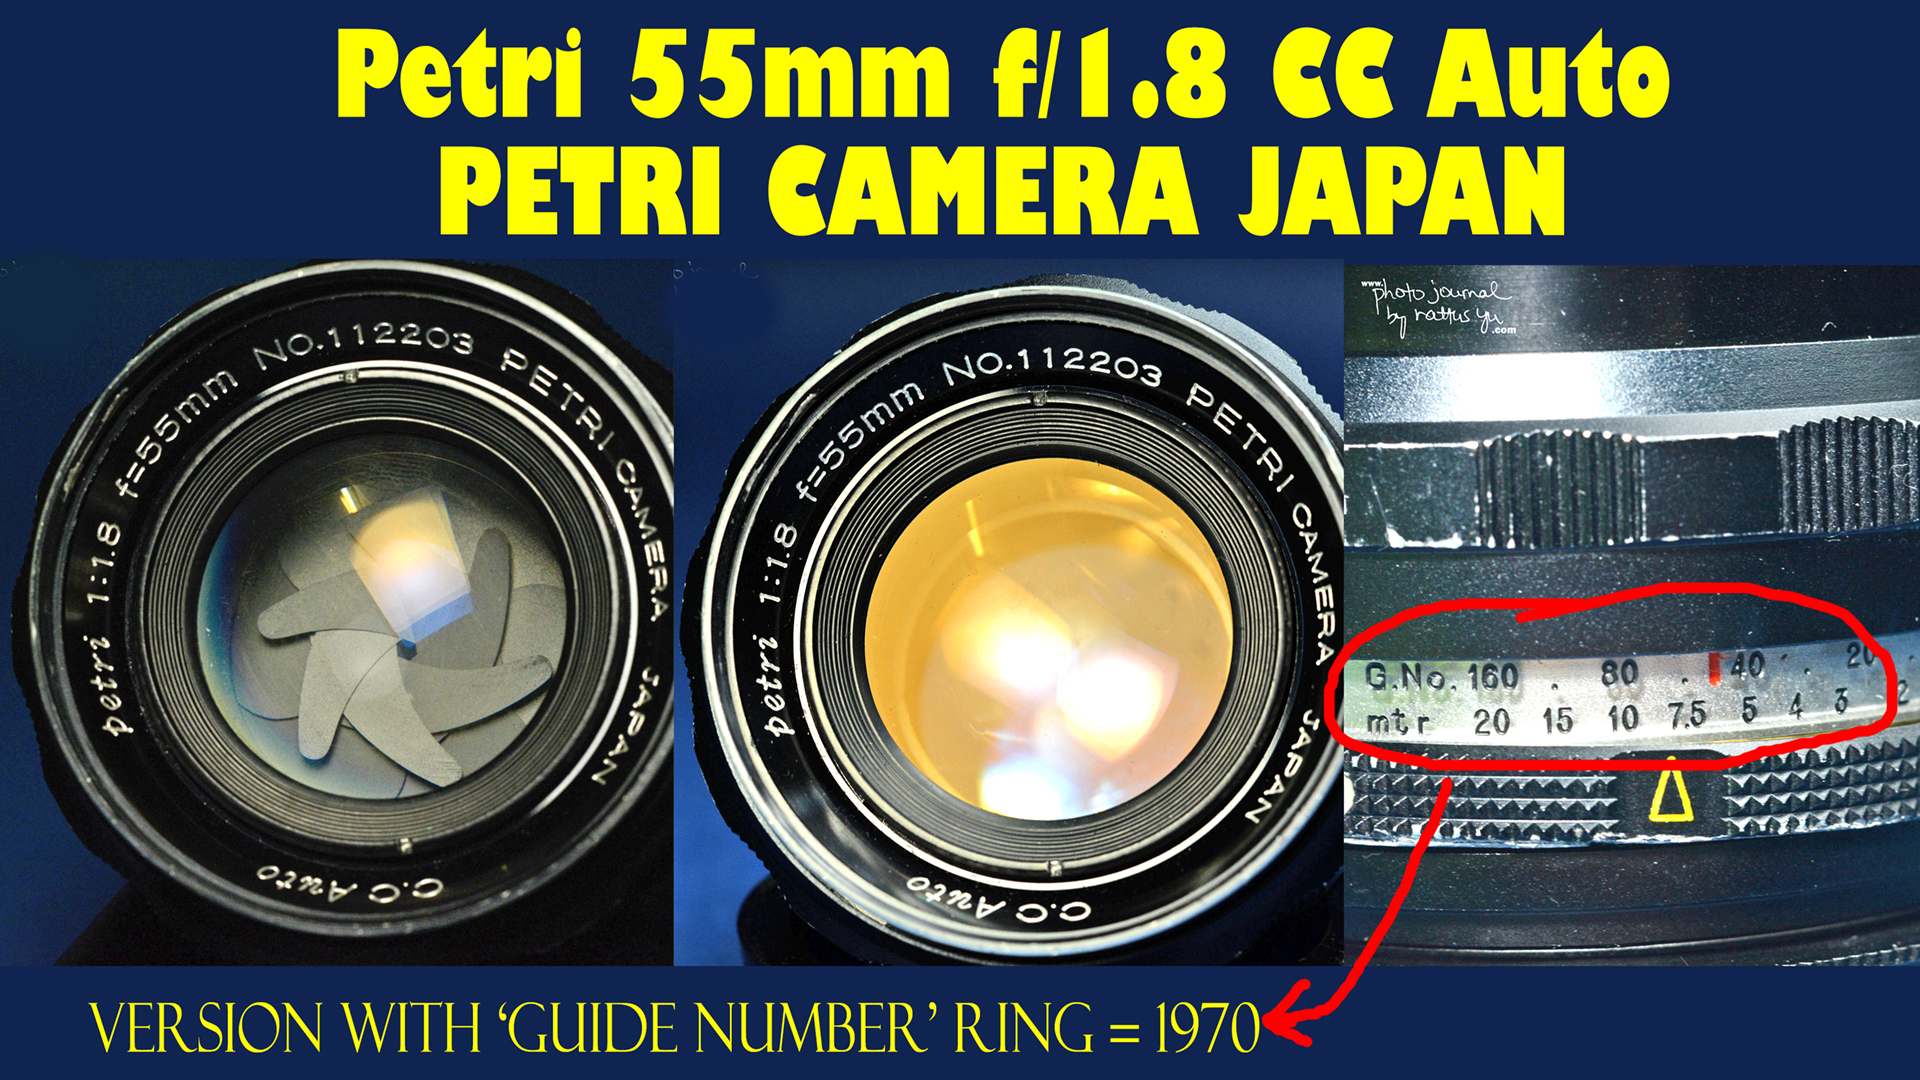 Petri 55mm f/1.8 CC Auto, PETRI CAMERA JAPAN